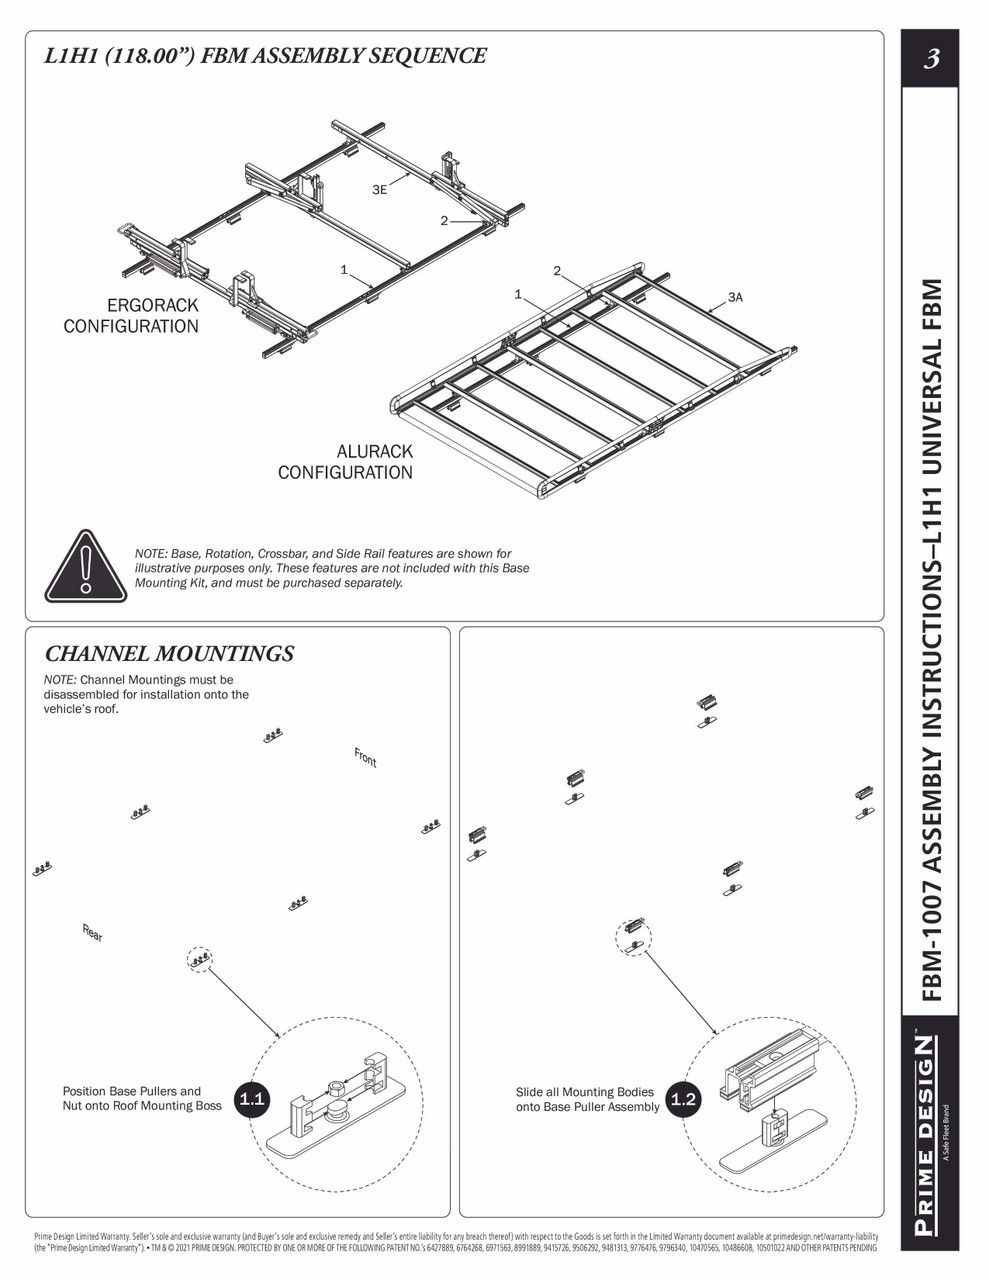 LadderProducts.com | Prime Design FBM-1007 RAM ProMaster Roof Mounting Kit